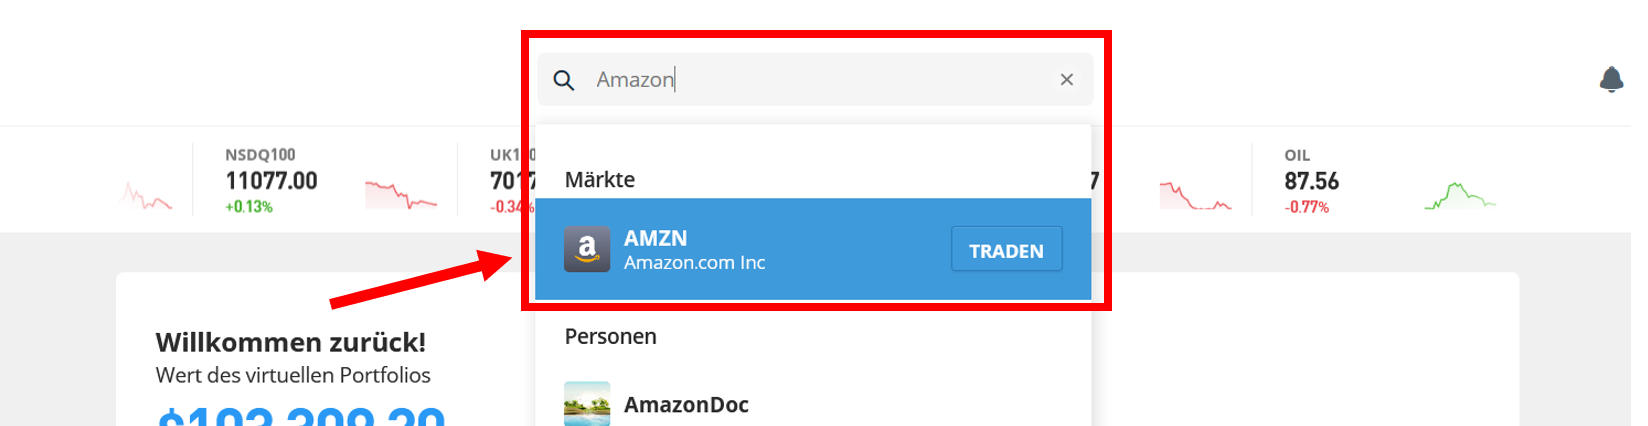 eToro Amazon Aktie kaufen